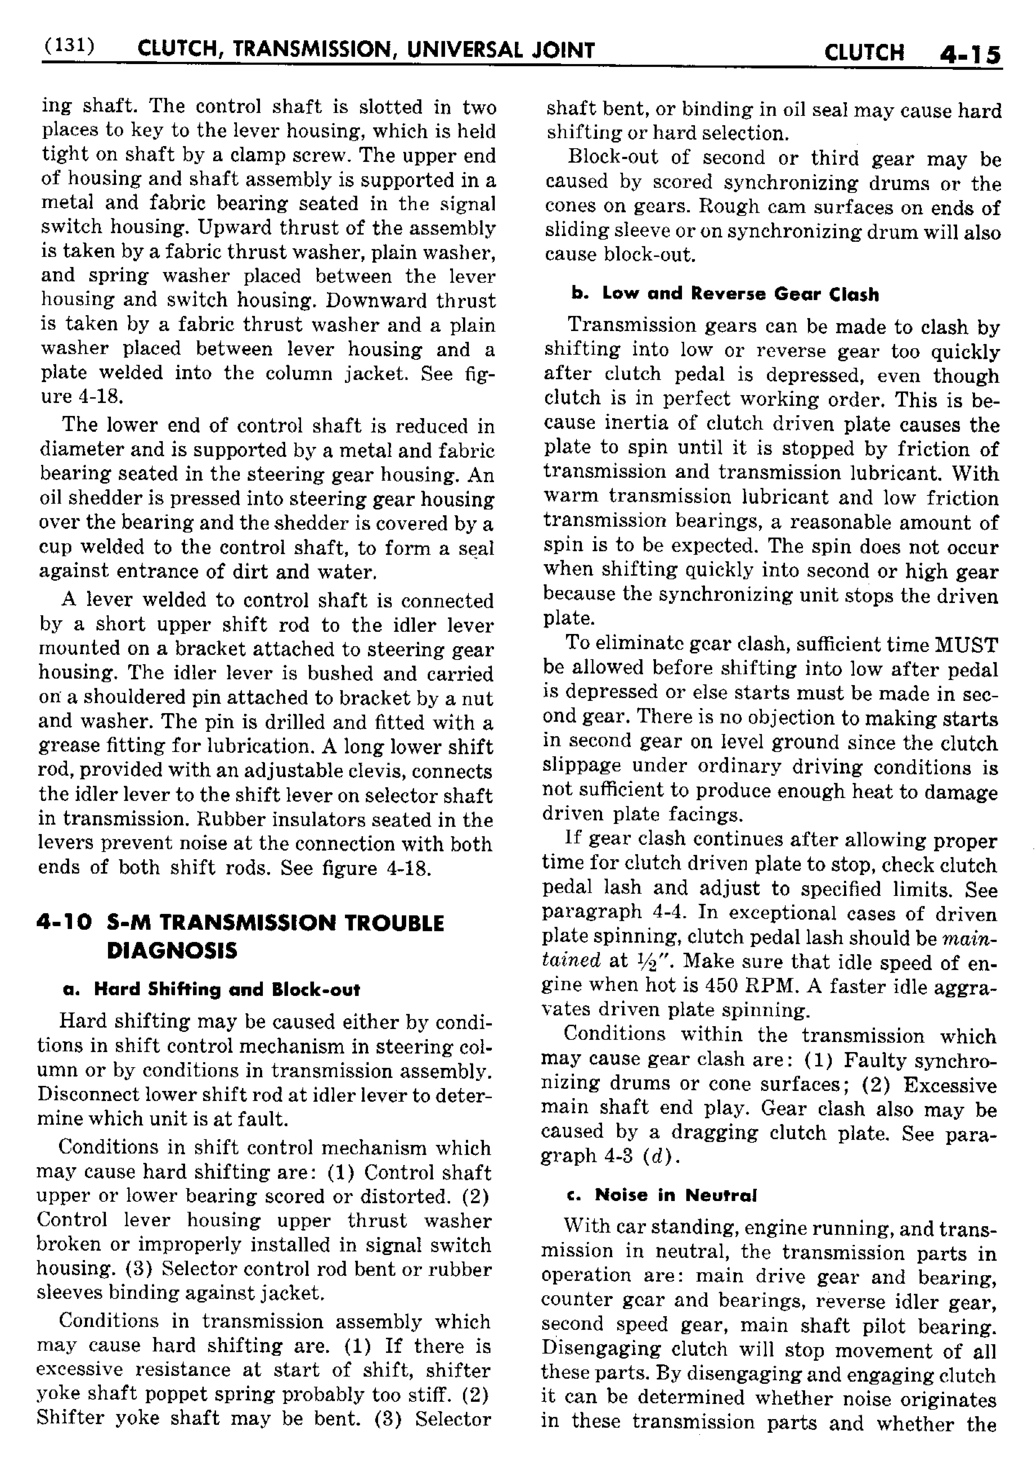 n_05 1950 Buick Shop Manual - Transmission-015-015.jpg